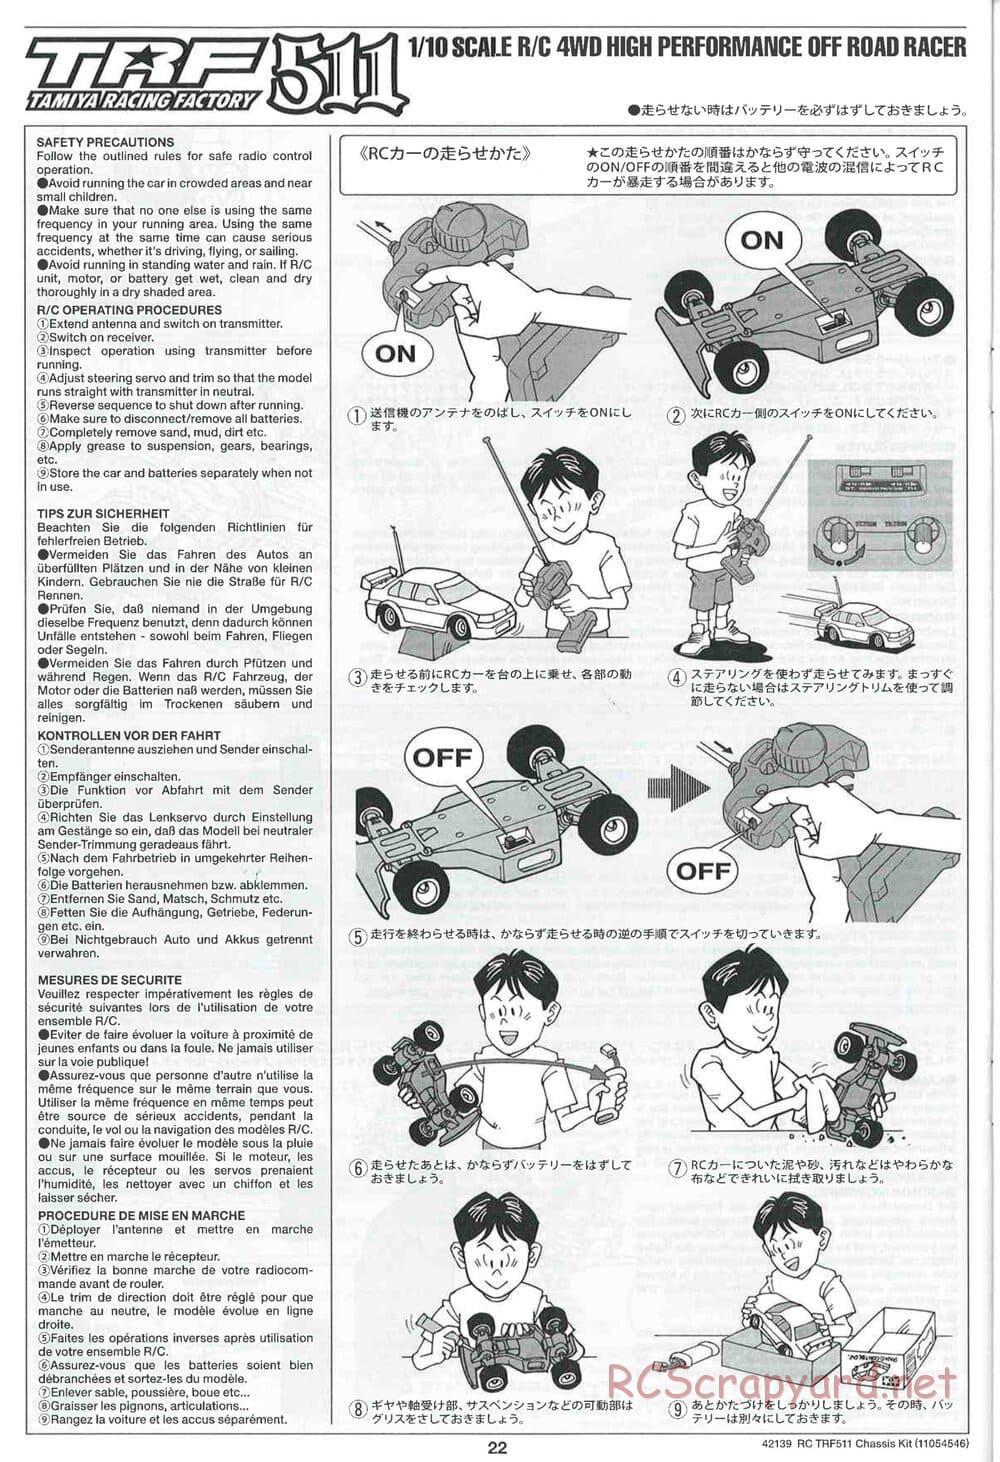 Tamiya - TRF511 Chassis - Manual - Page 22